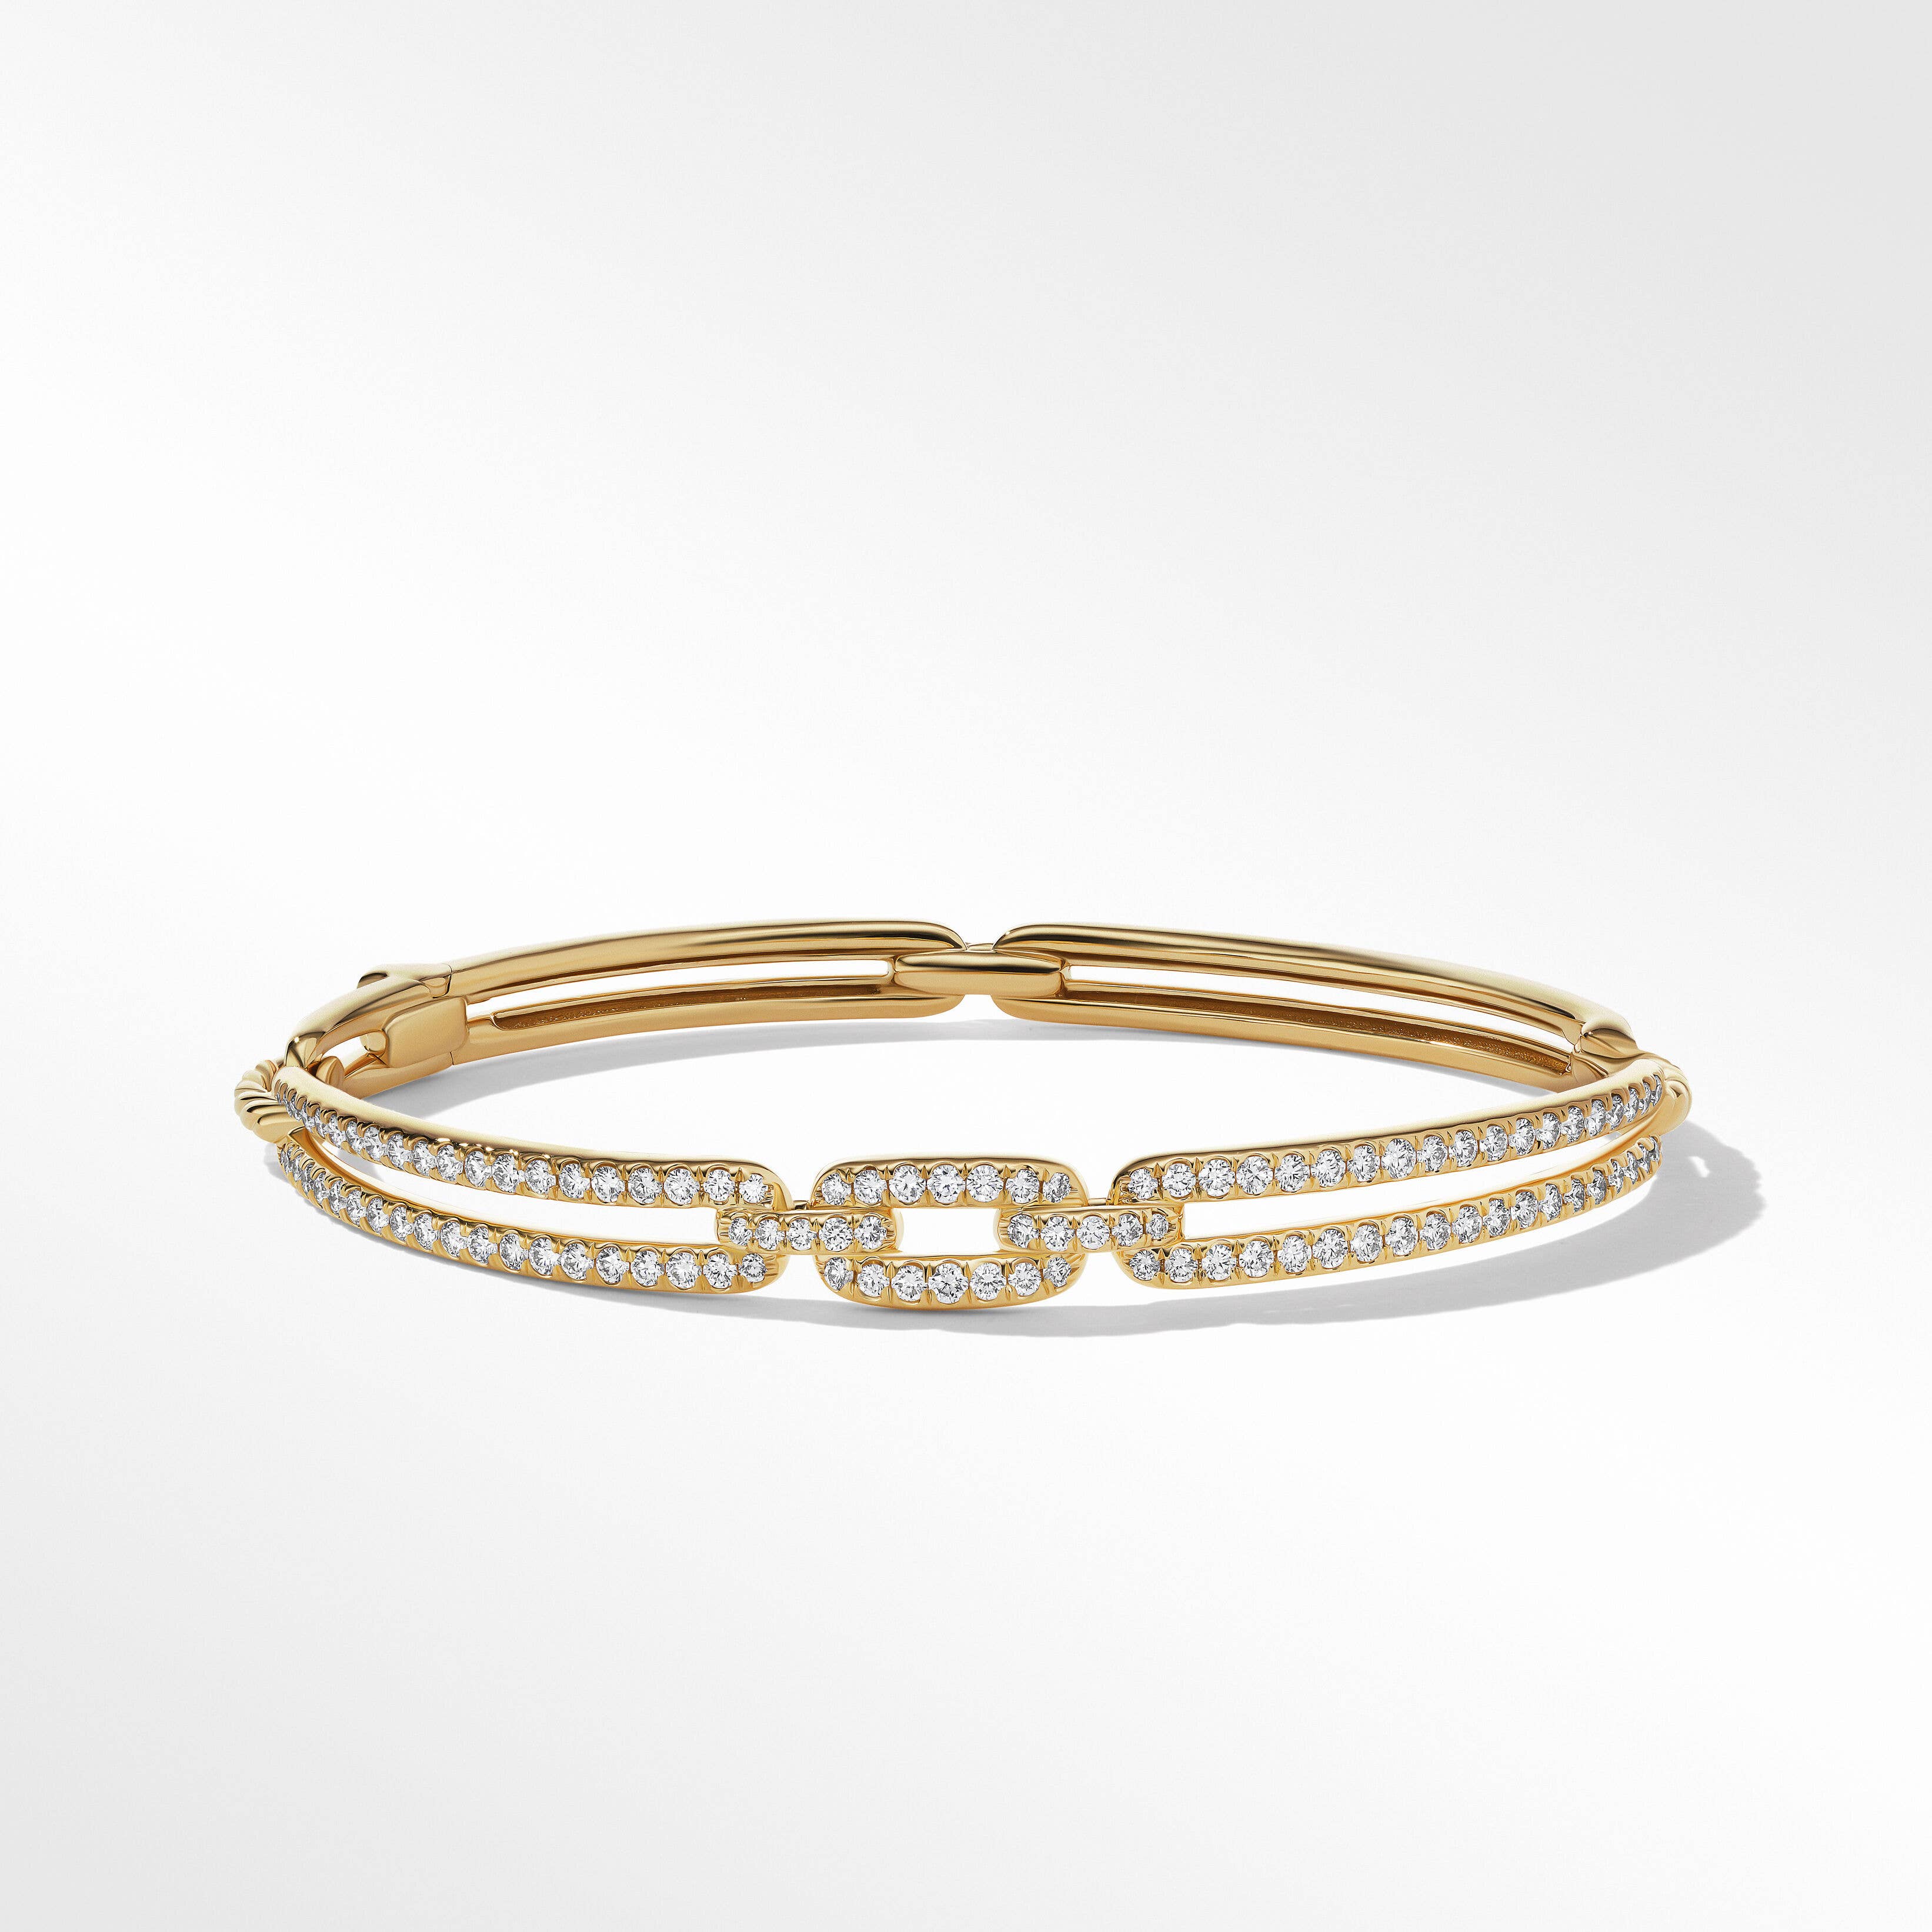 Stax Linked Bracelet in 18K Yellow Gold with Pavé Diamonds